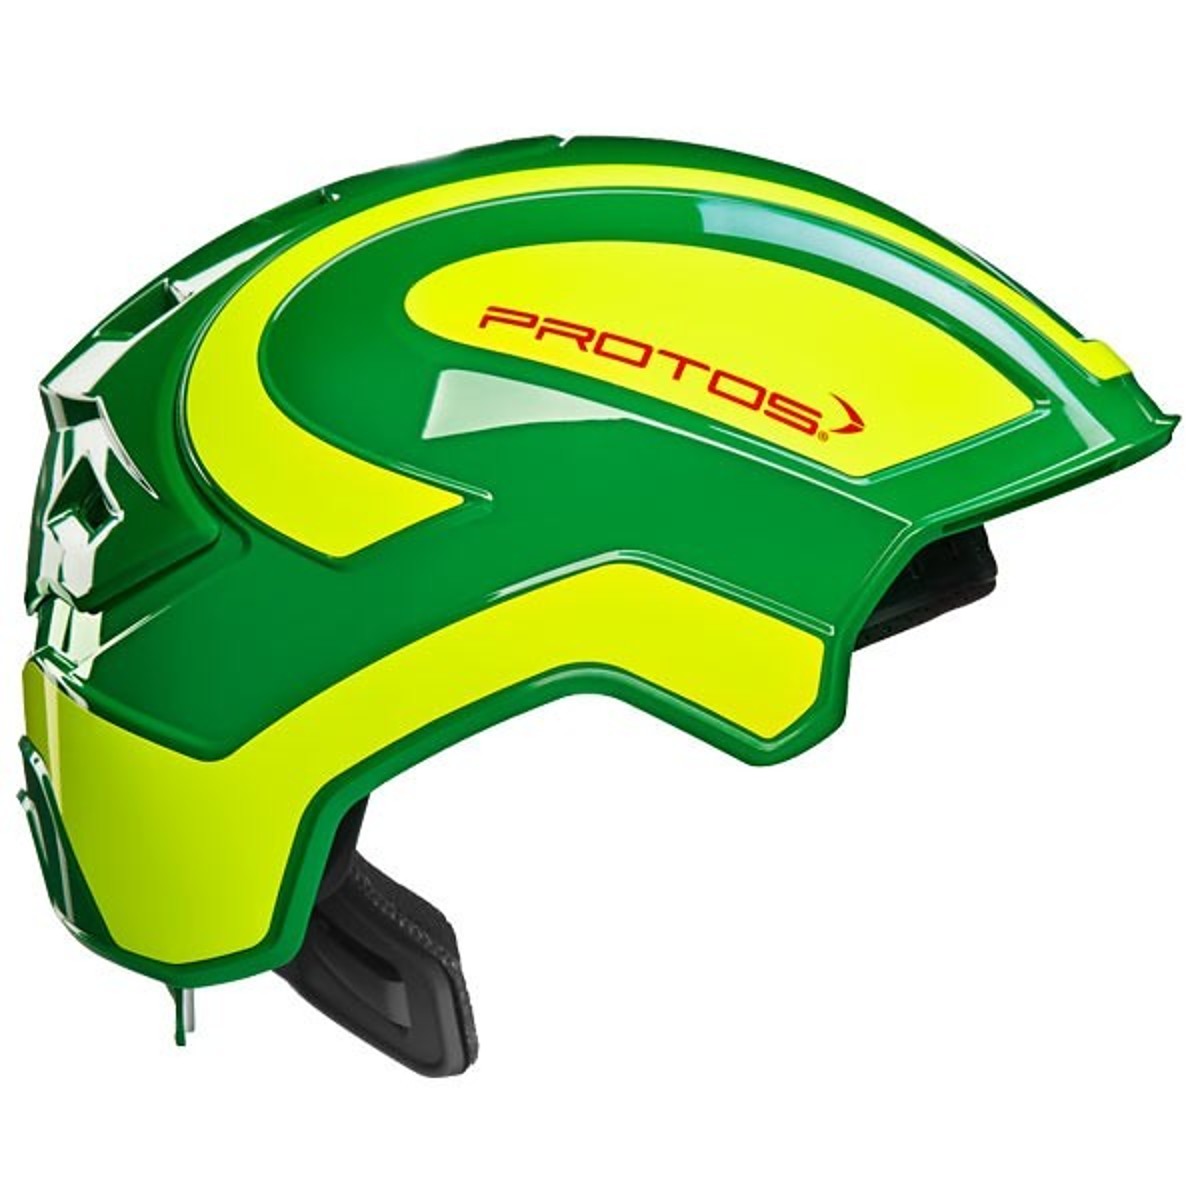 Protos integral safety helmet